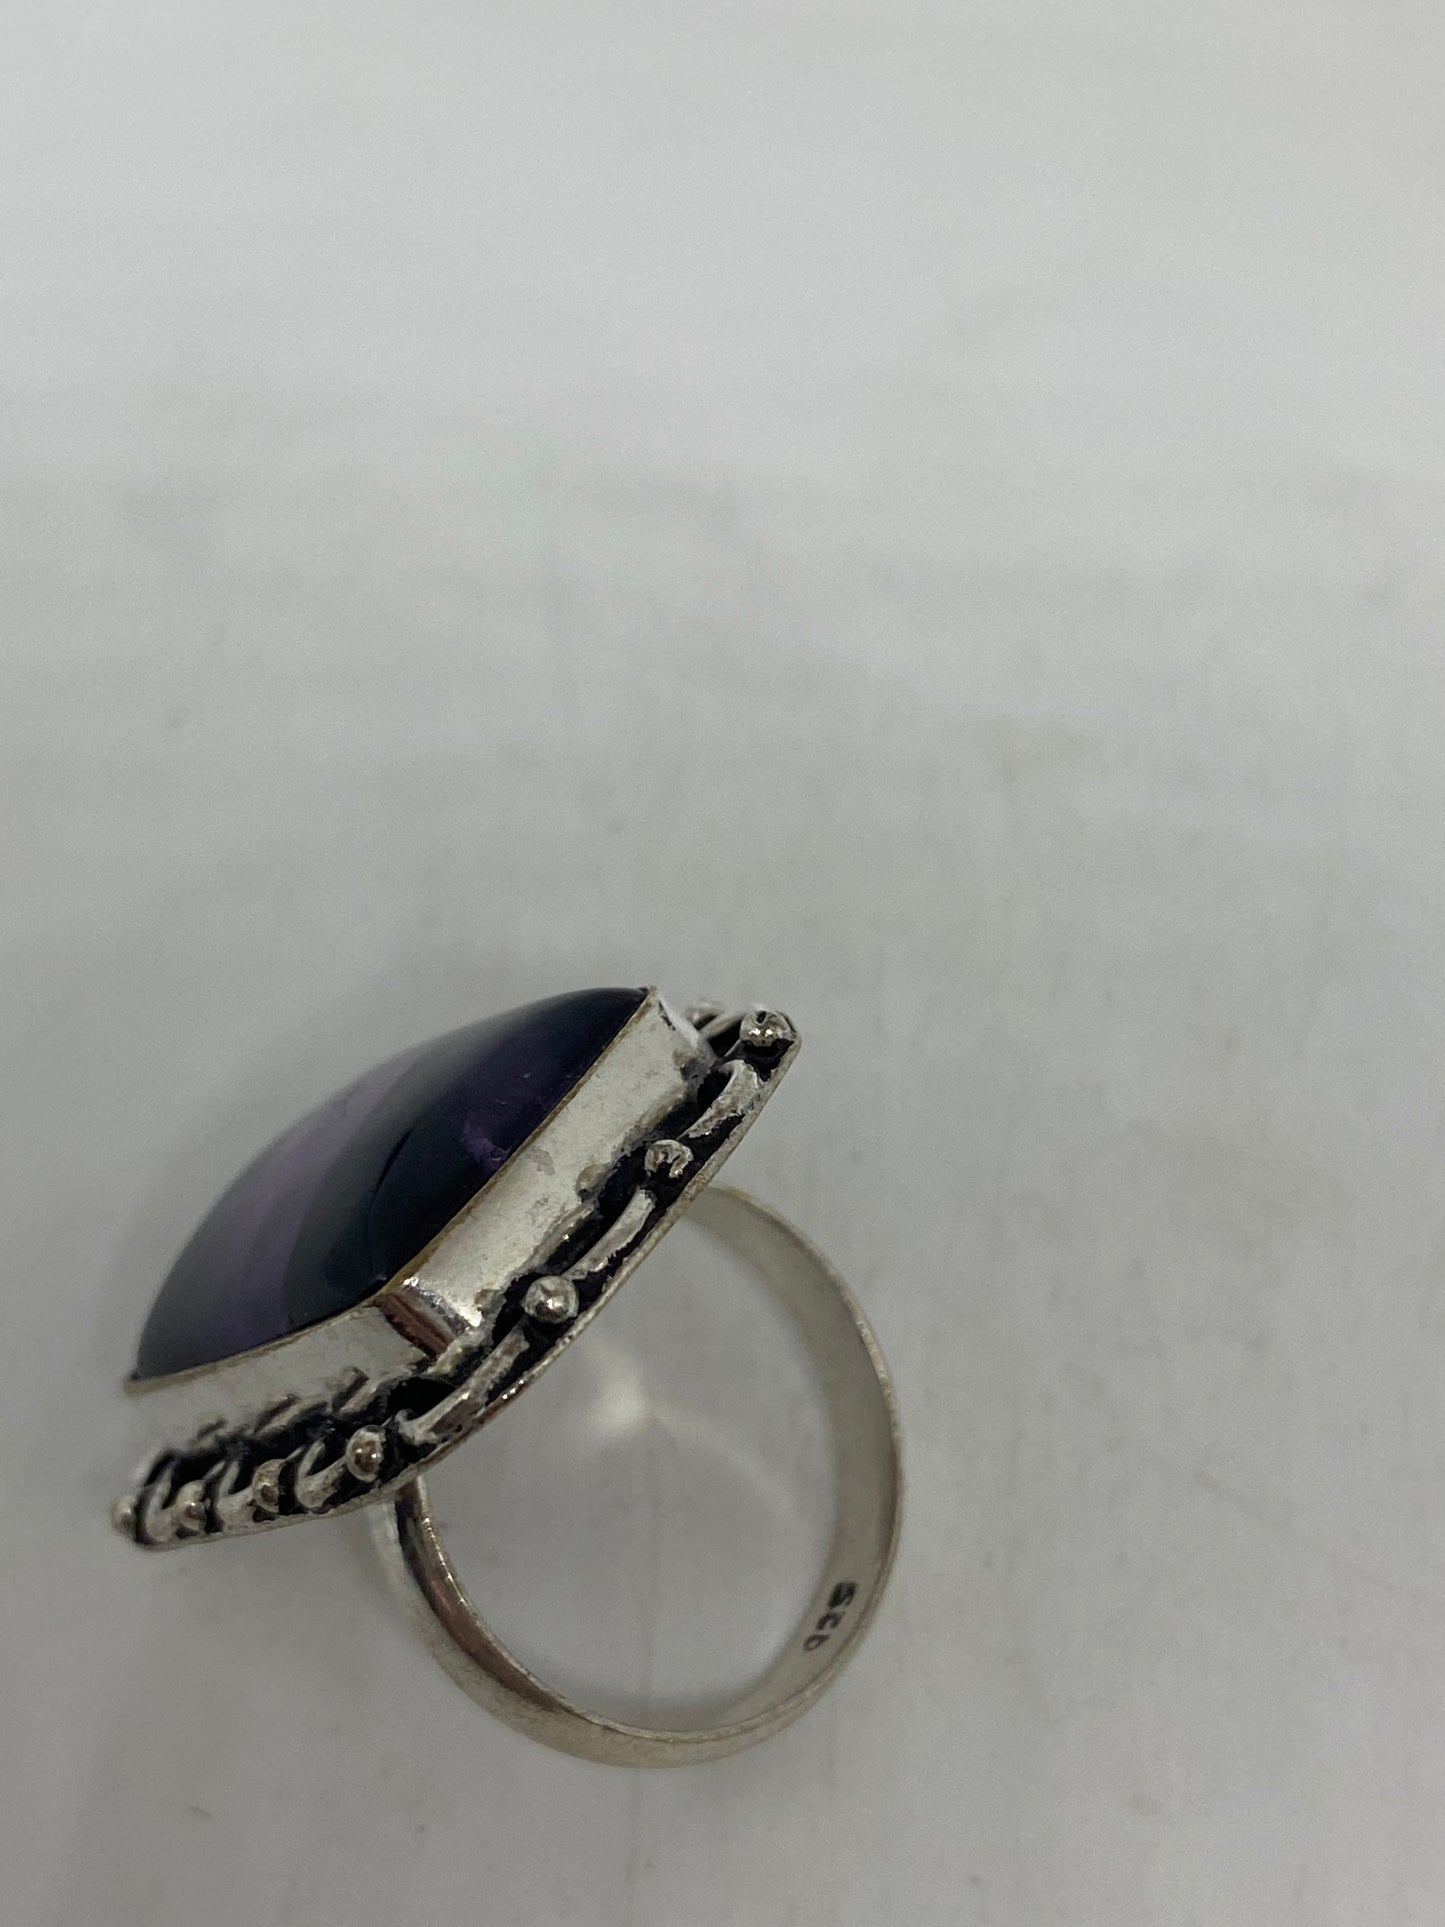 Vintage Genuine Amethyst Ring Size 8